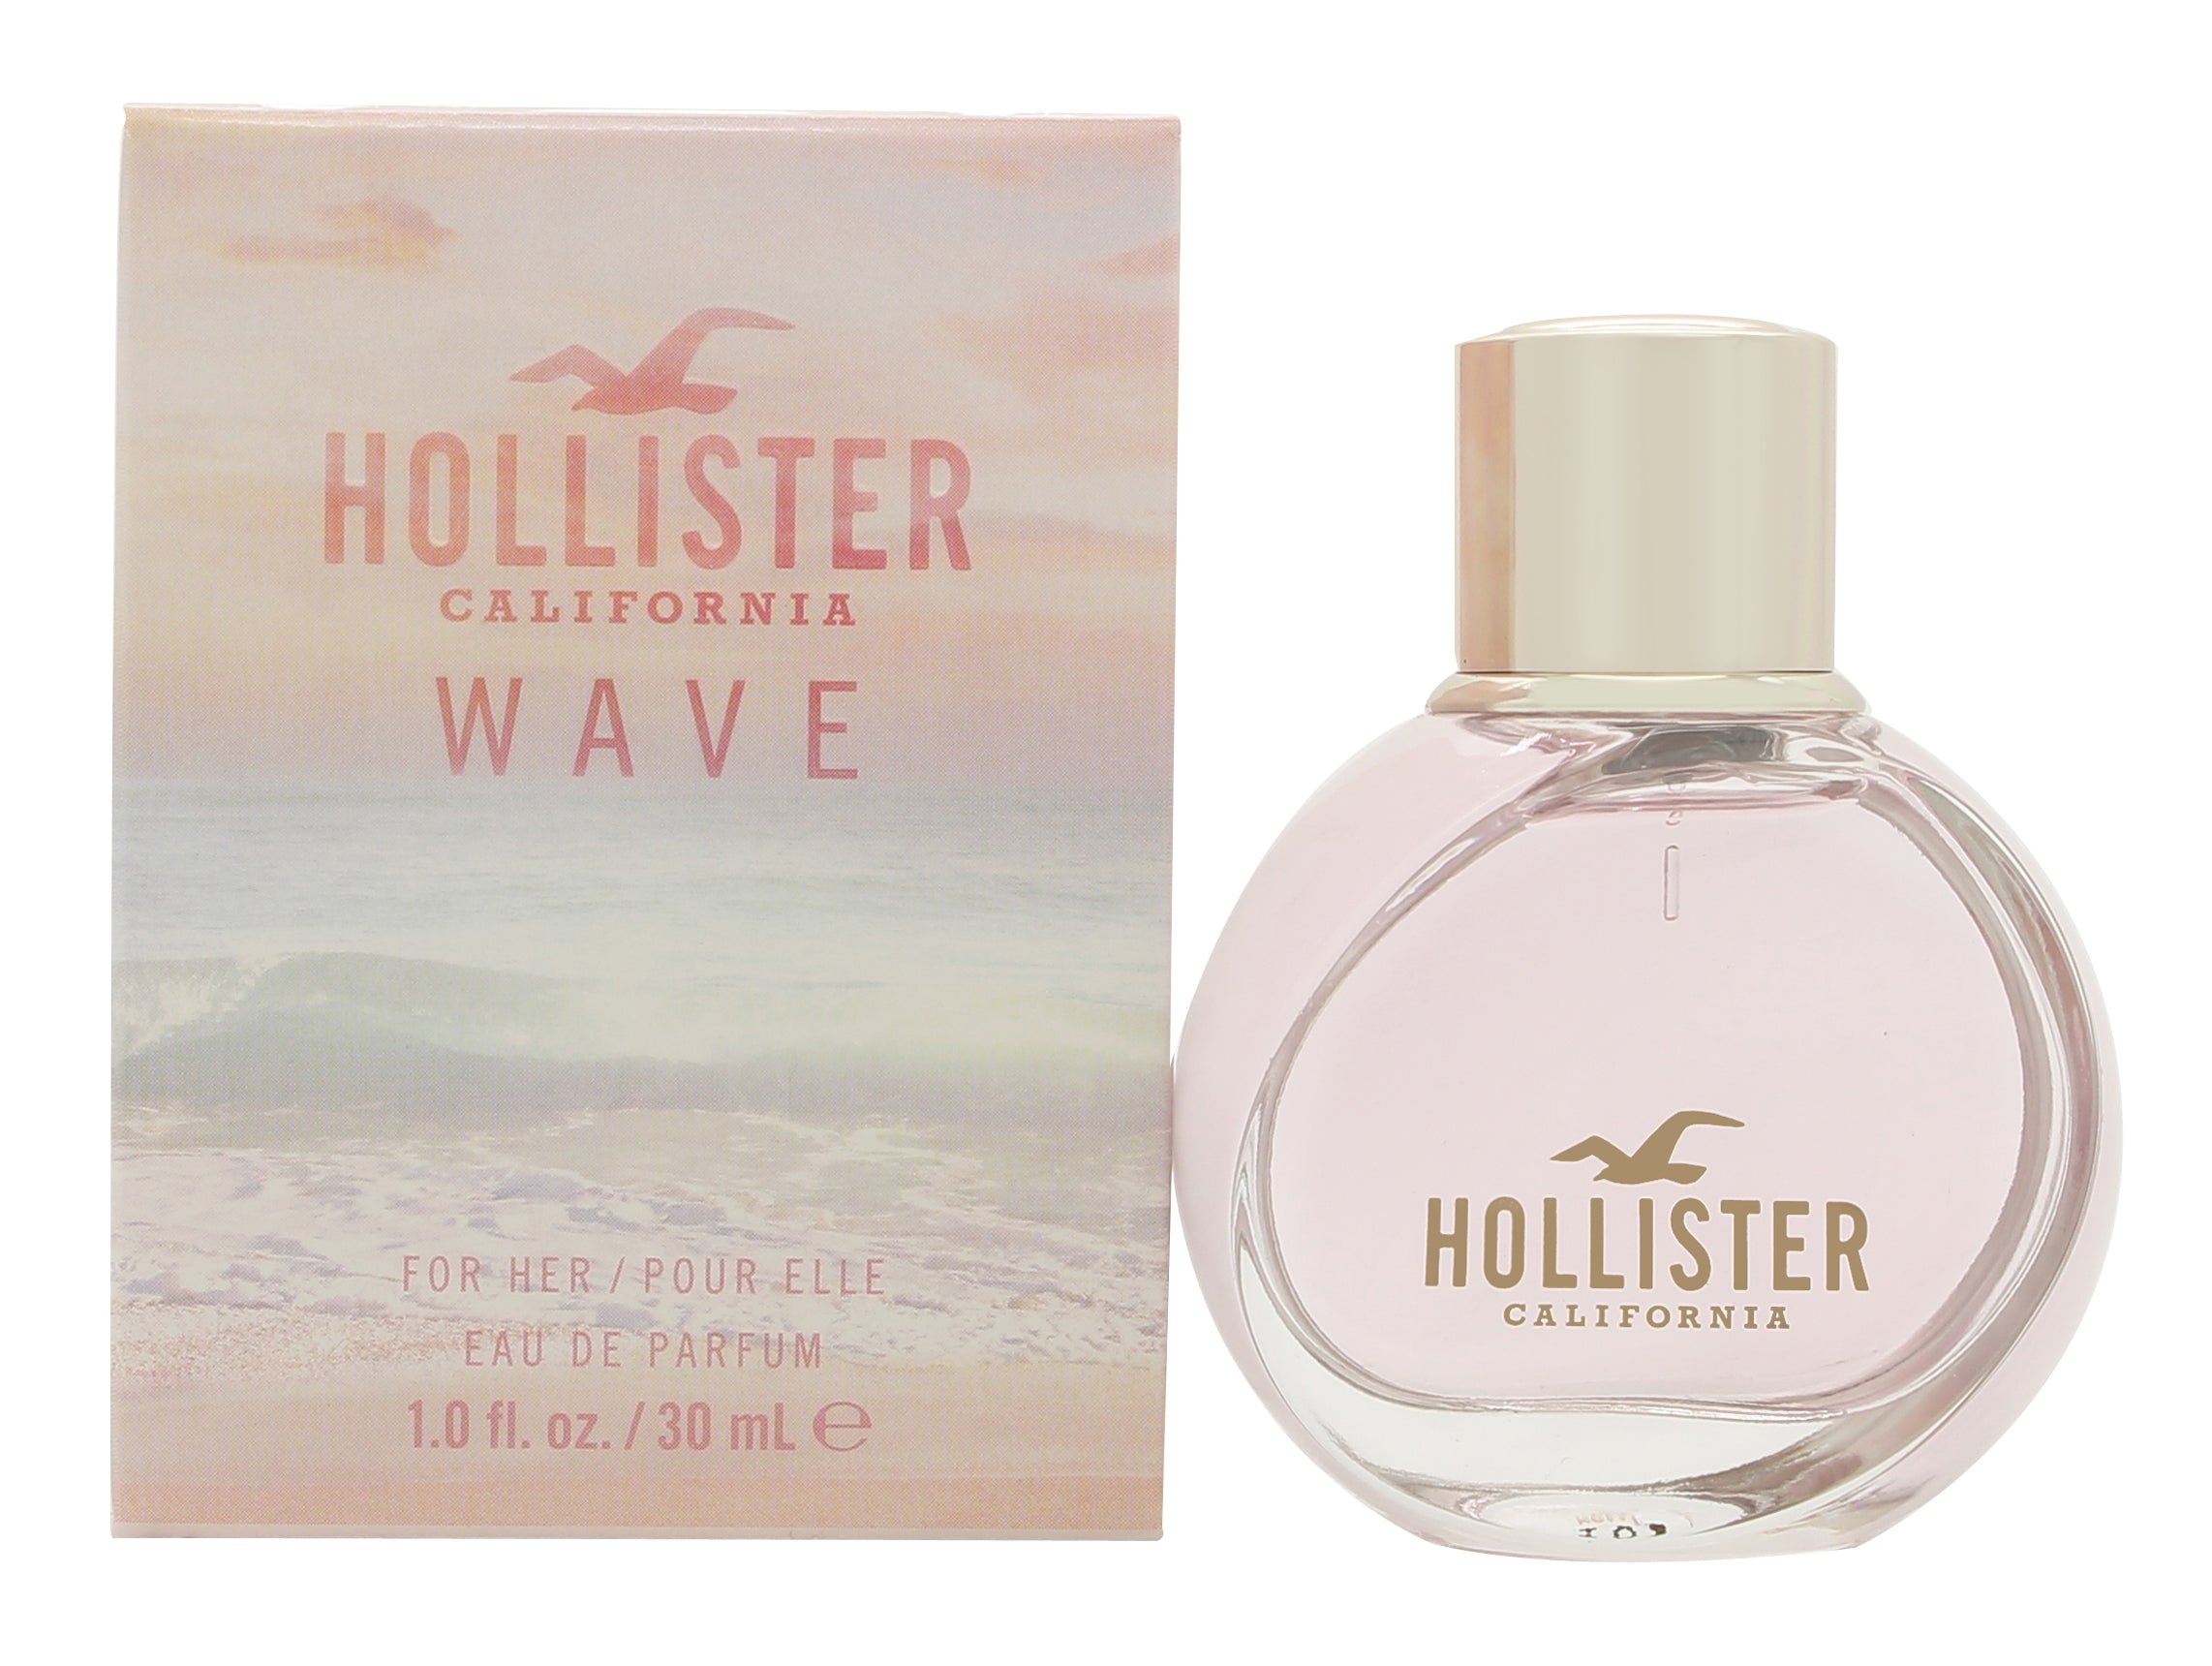 View Hollister Wave for Her Eau de Parfum 30ml Spray information